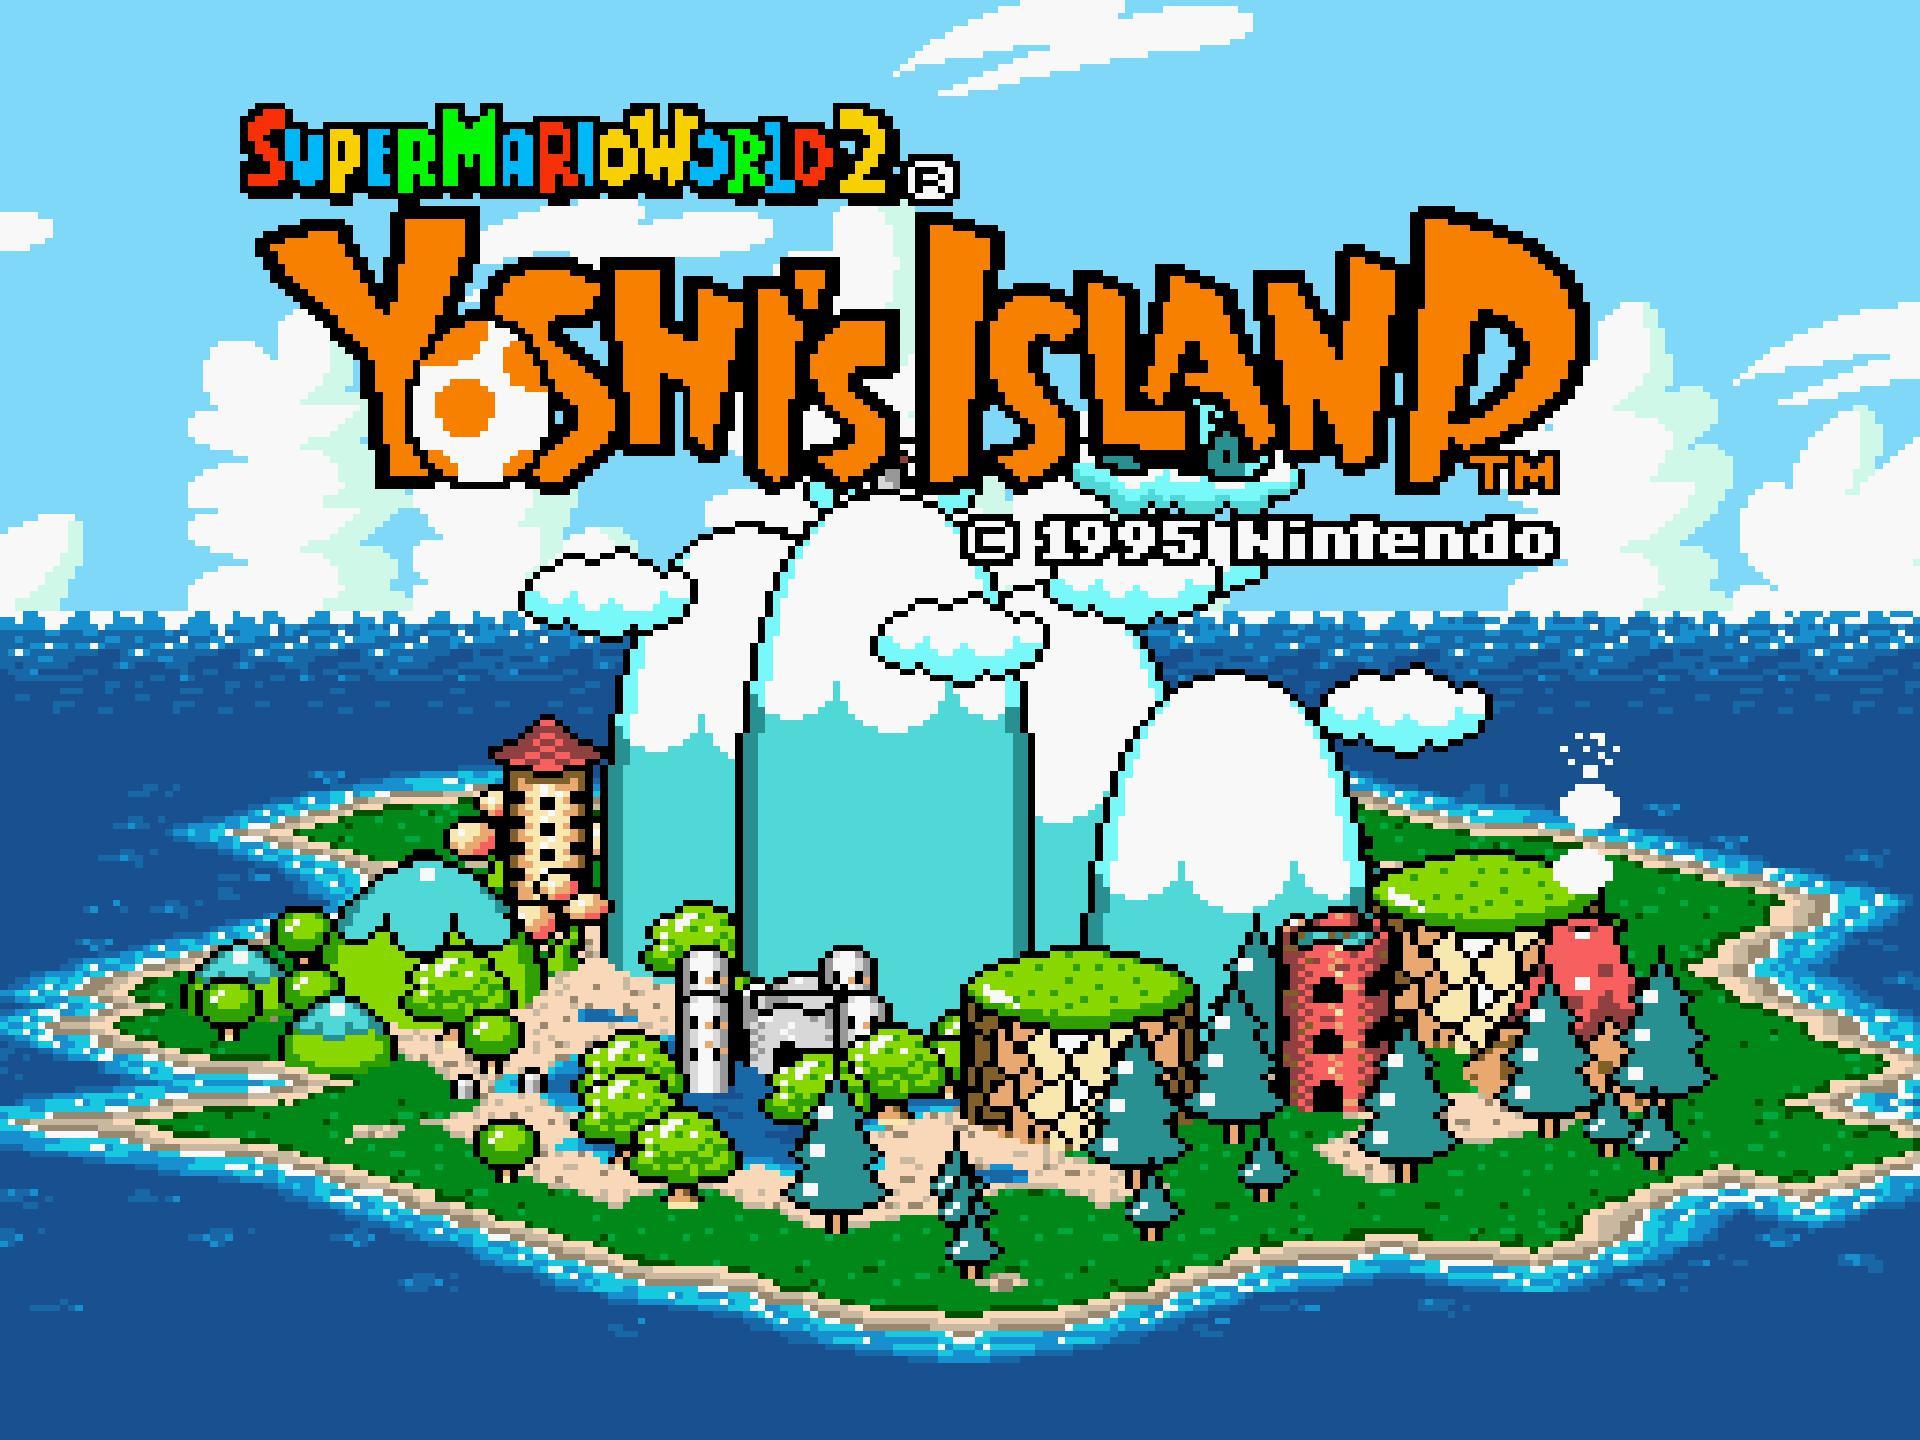 Yoshi island 2